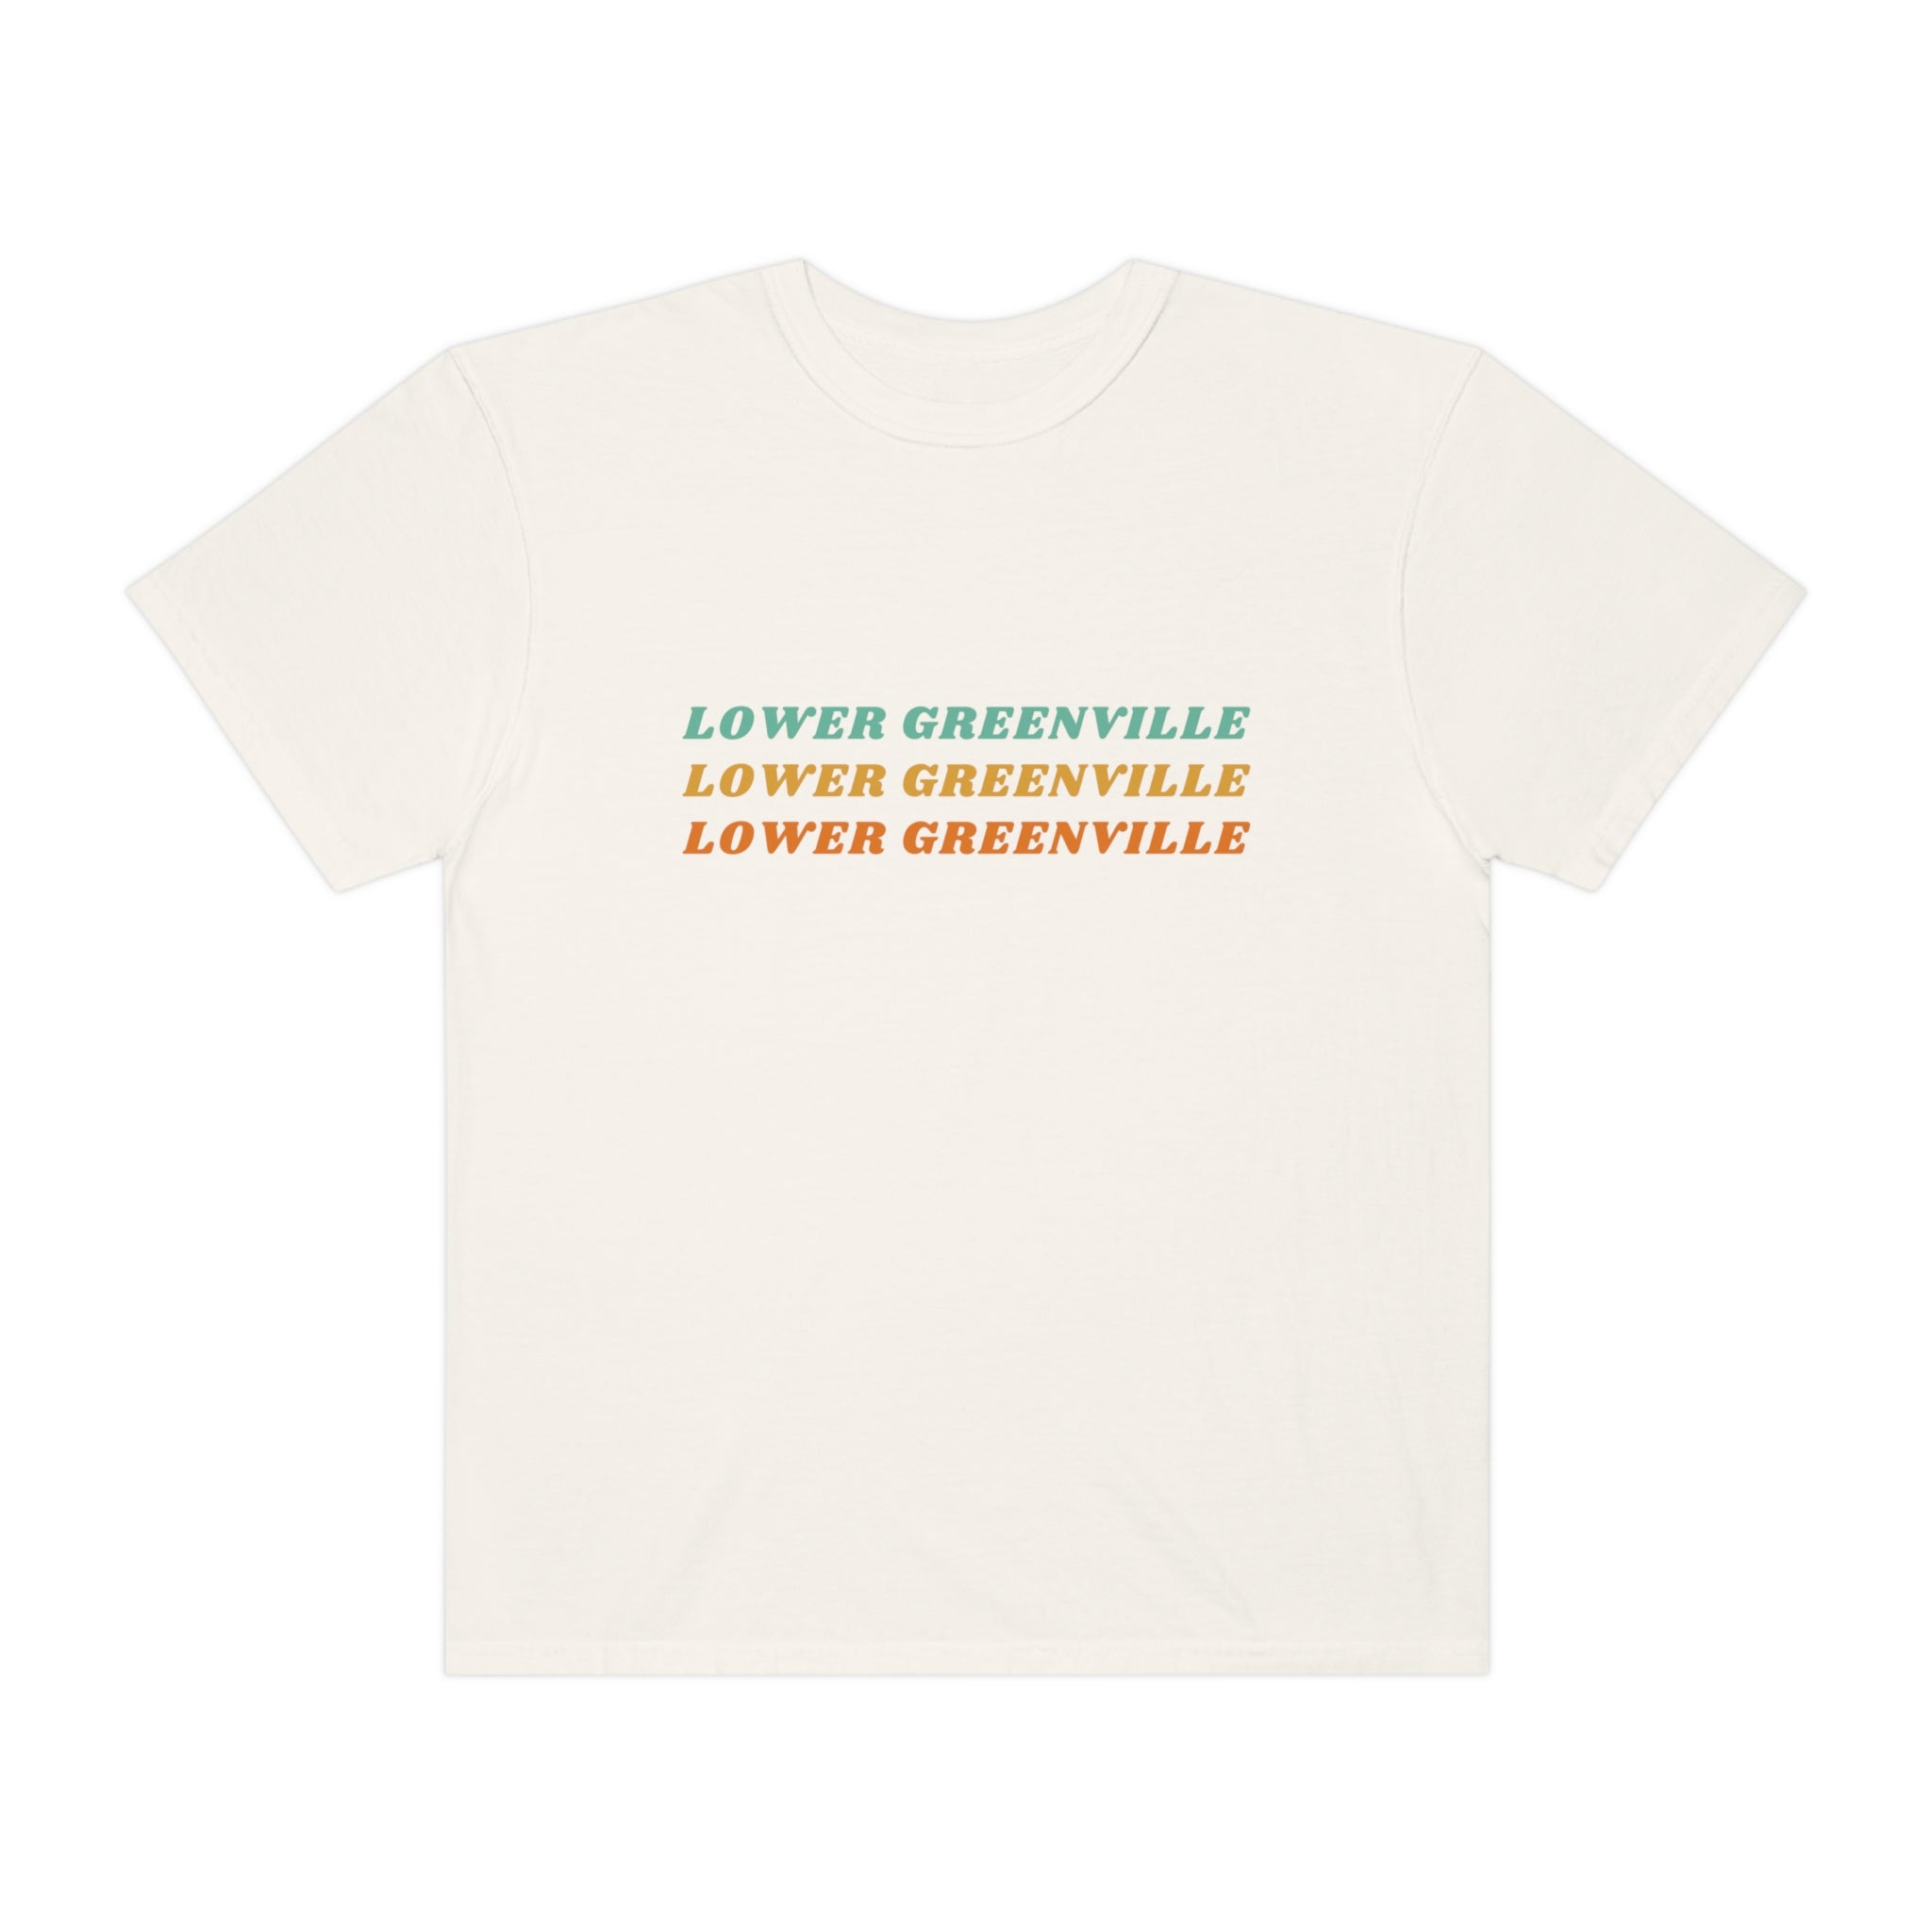 Lower Greenville Retro Typography T-shirt - Friends of Lower Greenville